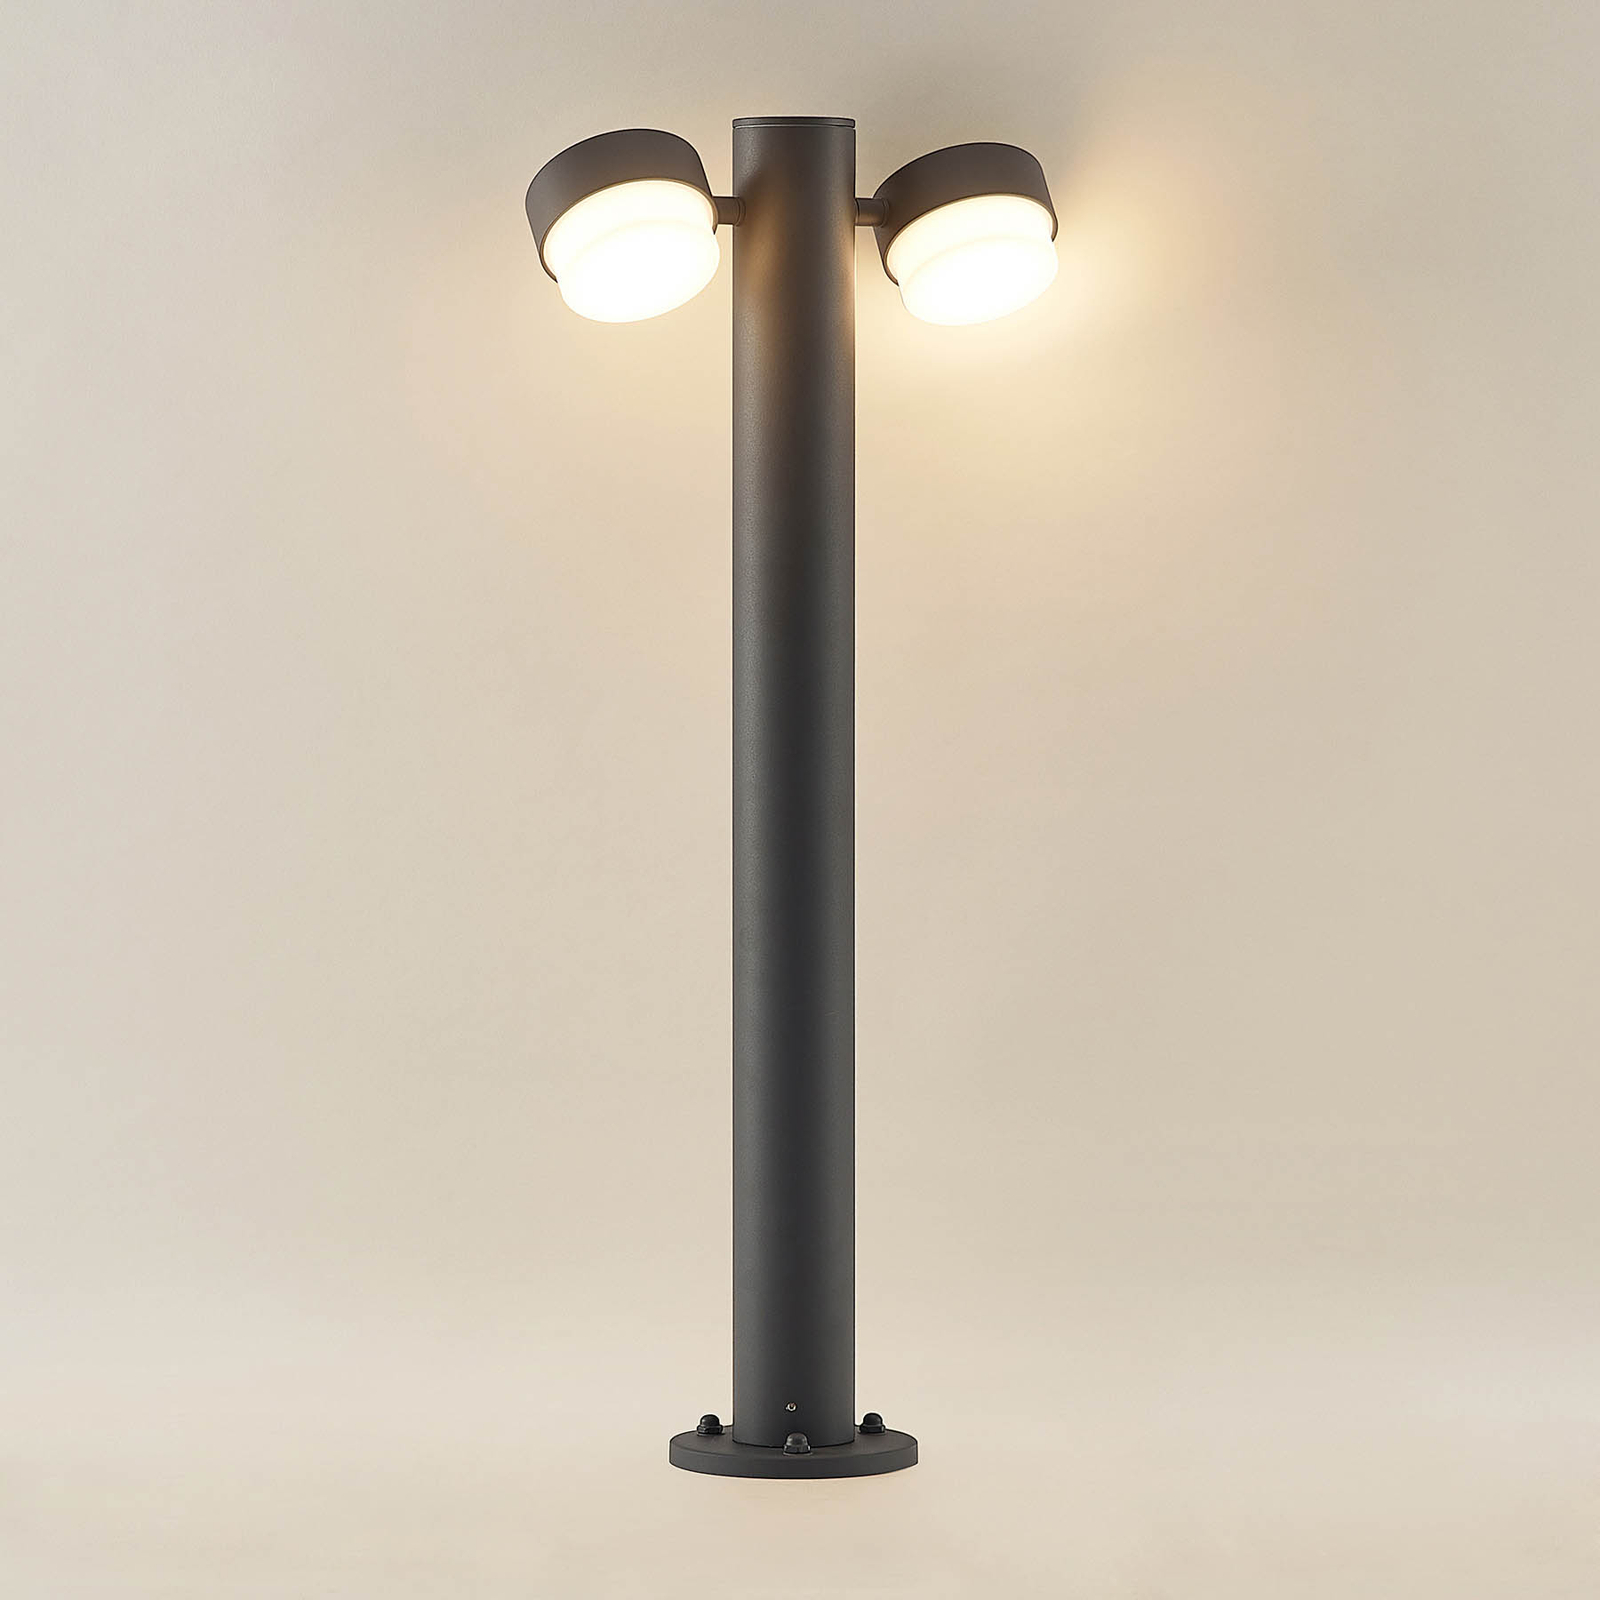 Lucande Marvella bollard light, two-bulb, 75 cm